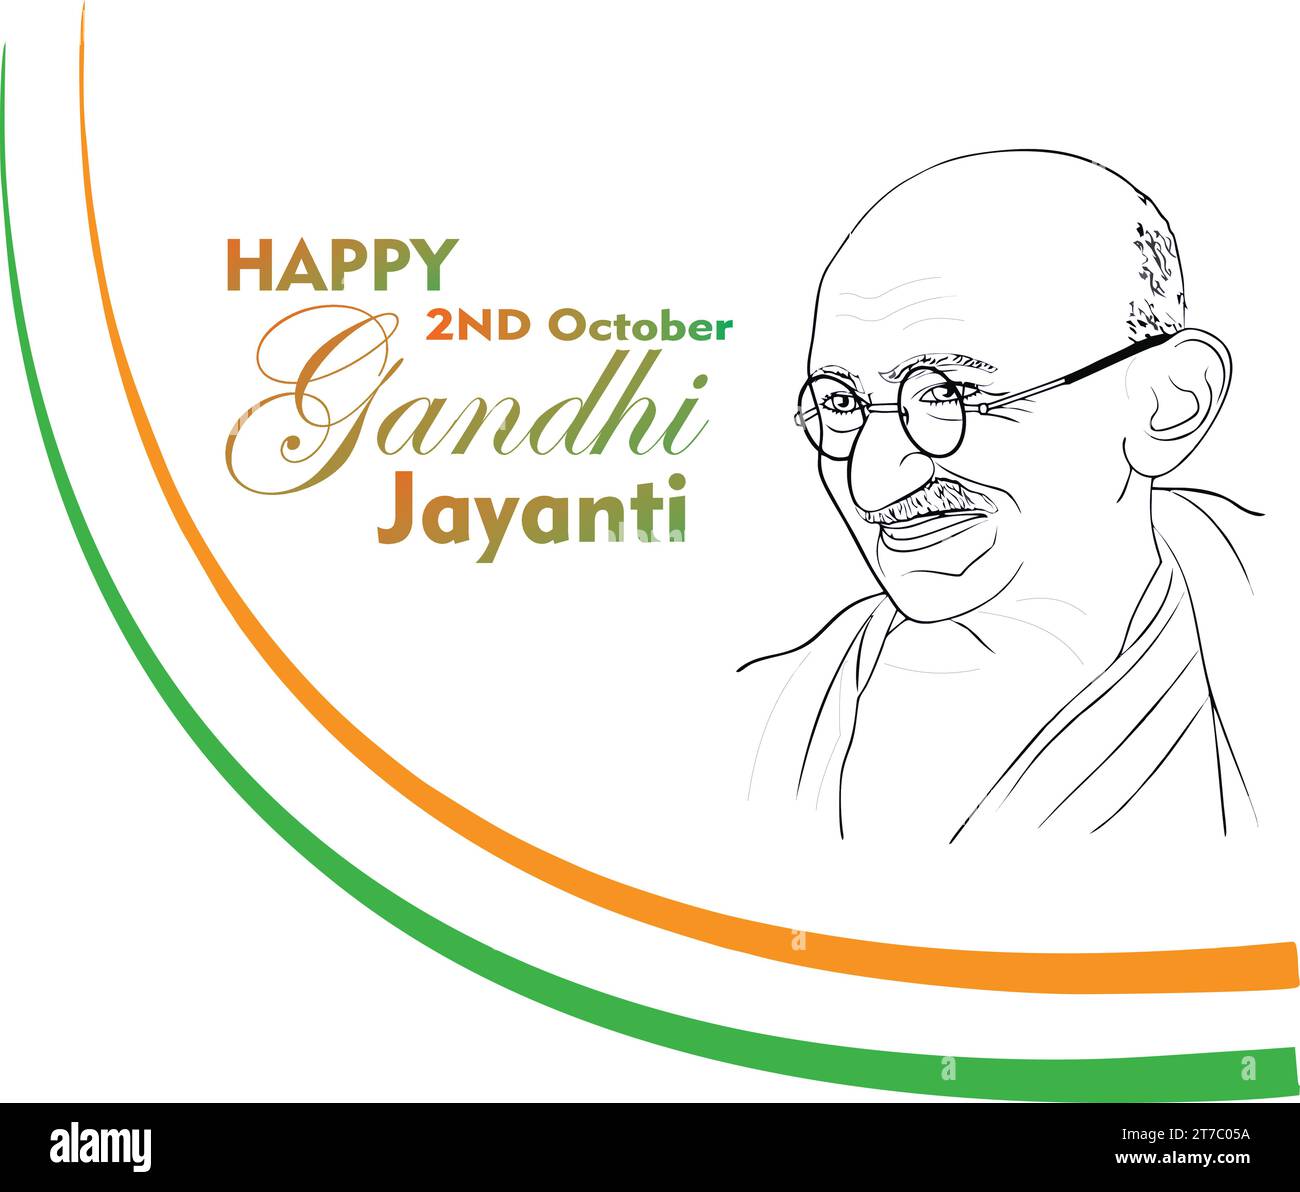 Happy Gandhi Jayanti 2nd October Stock Vector